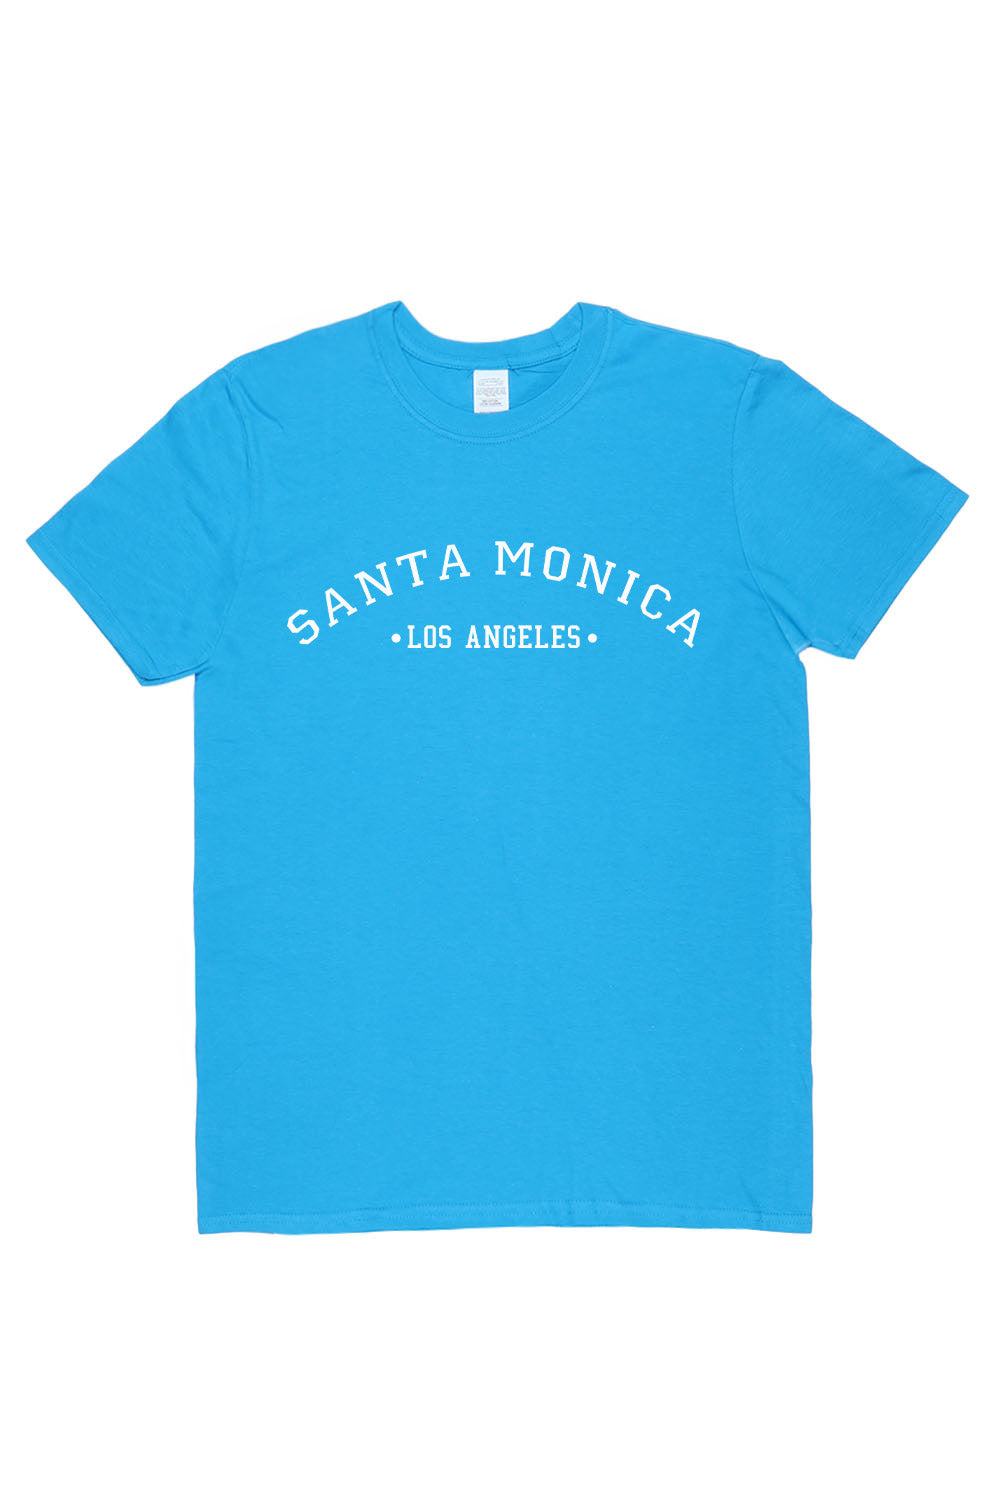 Santa Monica T-Shirt in Sapphire Blue (Custom Packs)